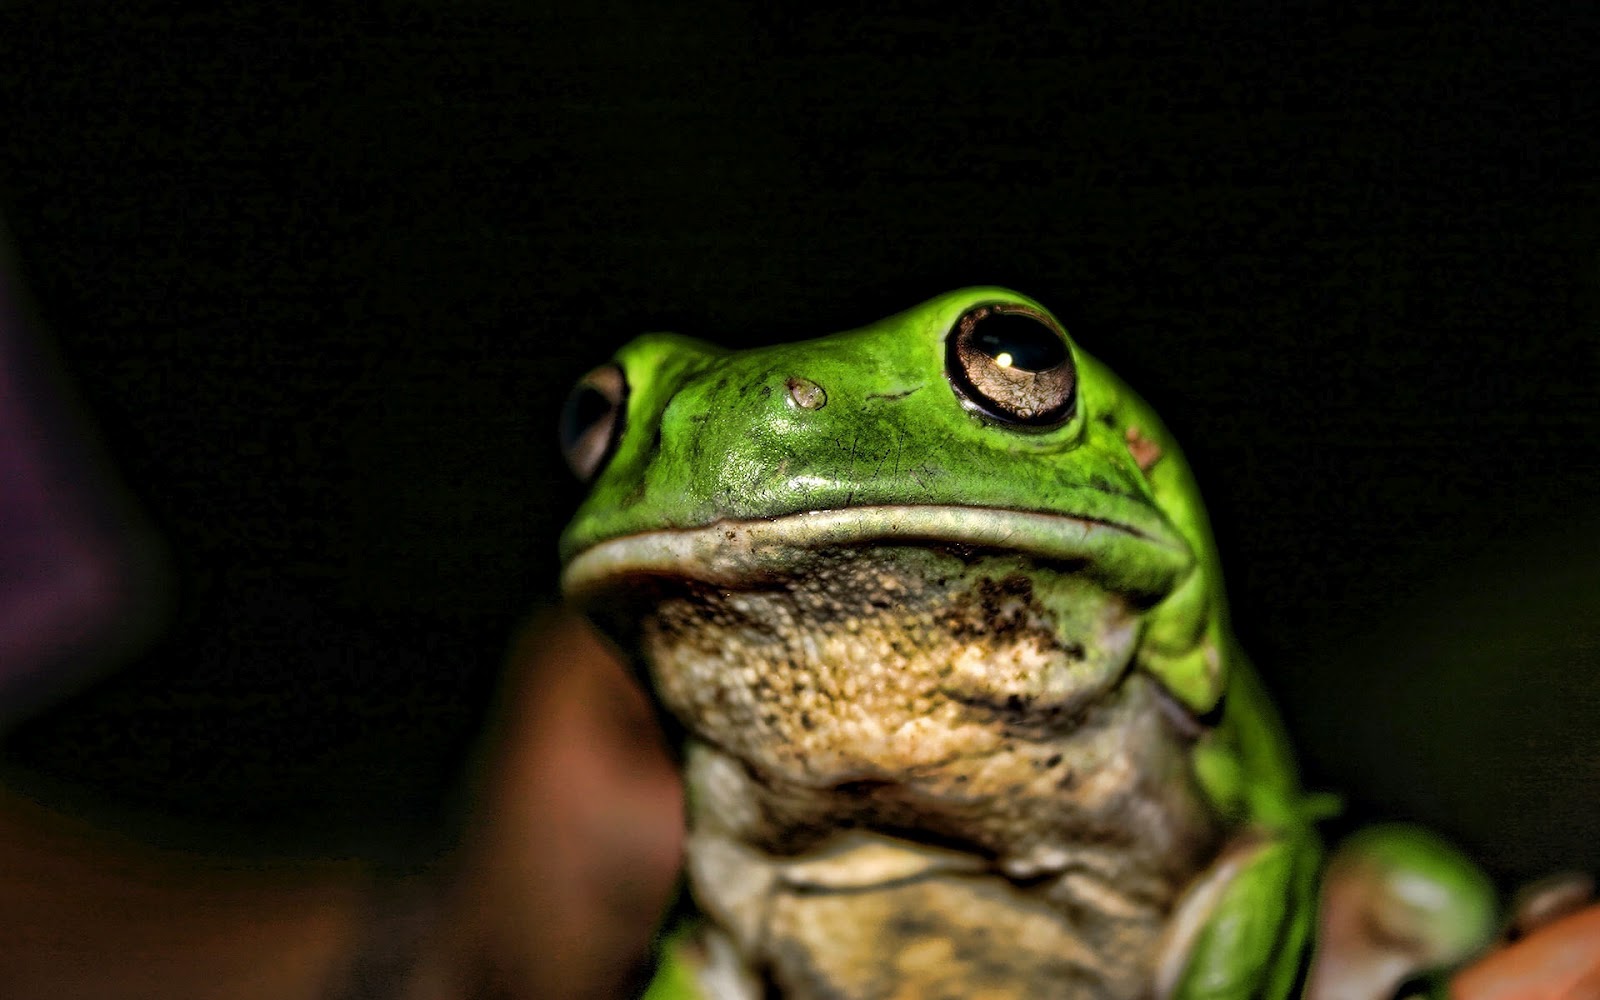 http://2.bp.blogspot.com/-NZLVW8ftgEo/UCQcMYNe7PI/AAAAAAAAAPI/r0atckjlIpw/s1600/hd-frog-wallpaper-with-a-green-frog-background-picture.jpg